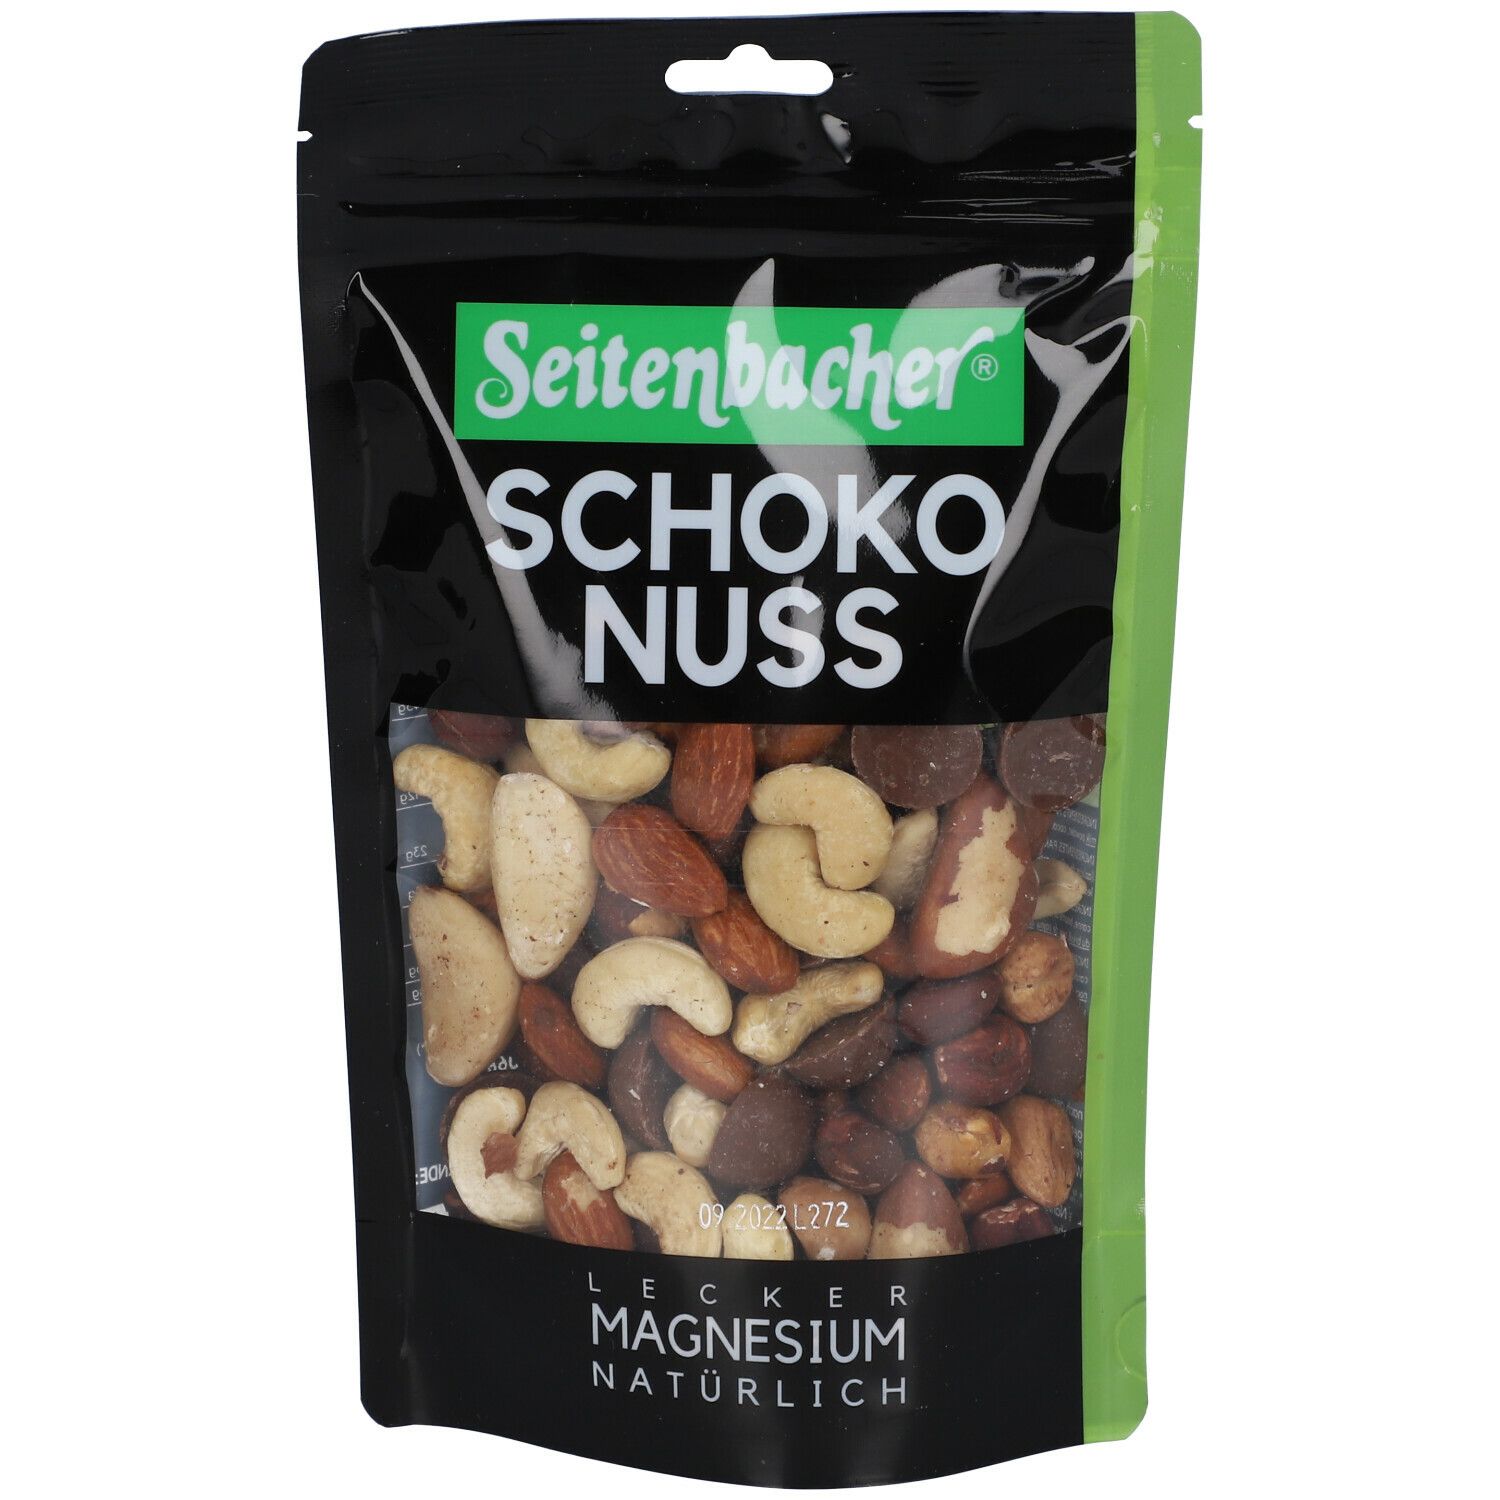 Seitenbacher® Schoko-Nuss